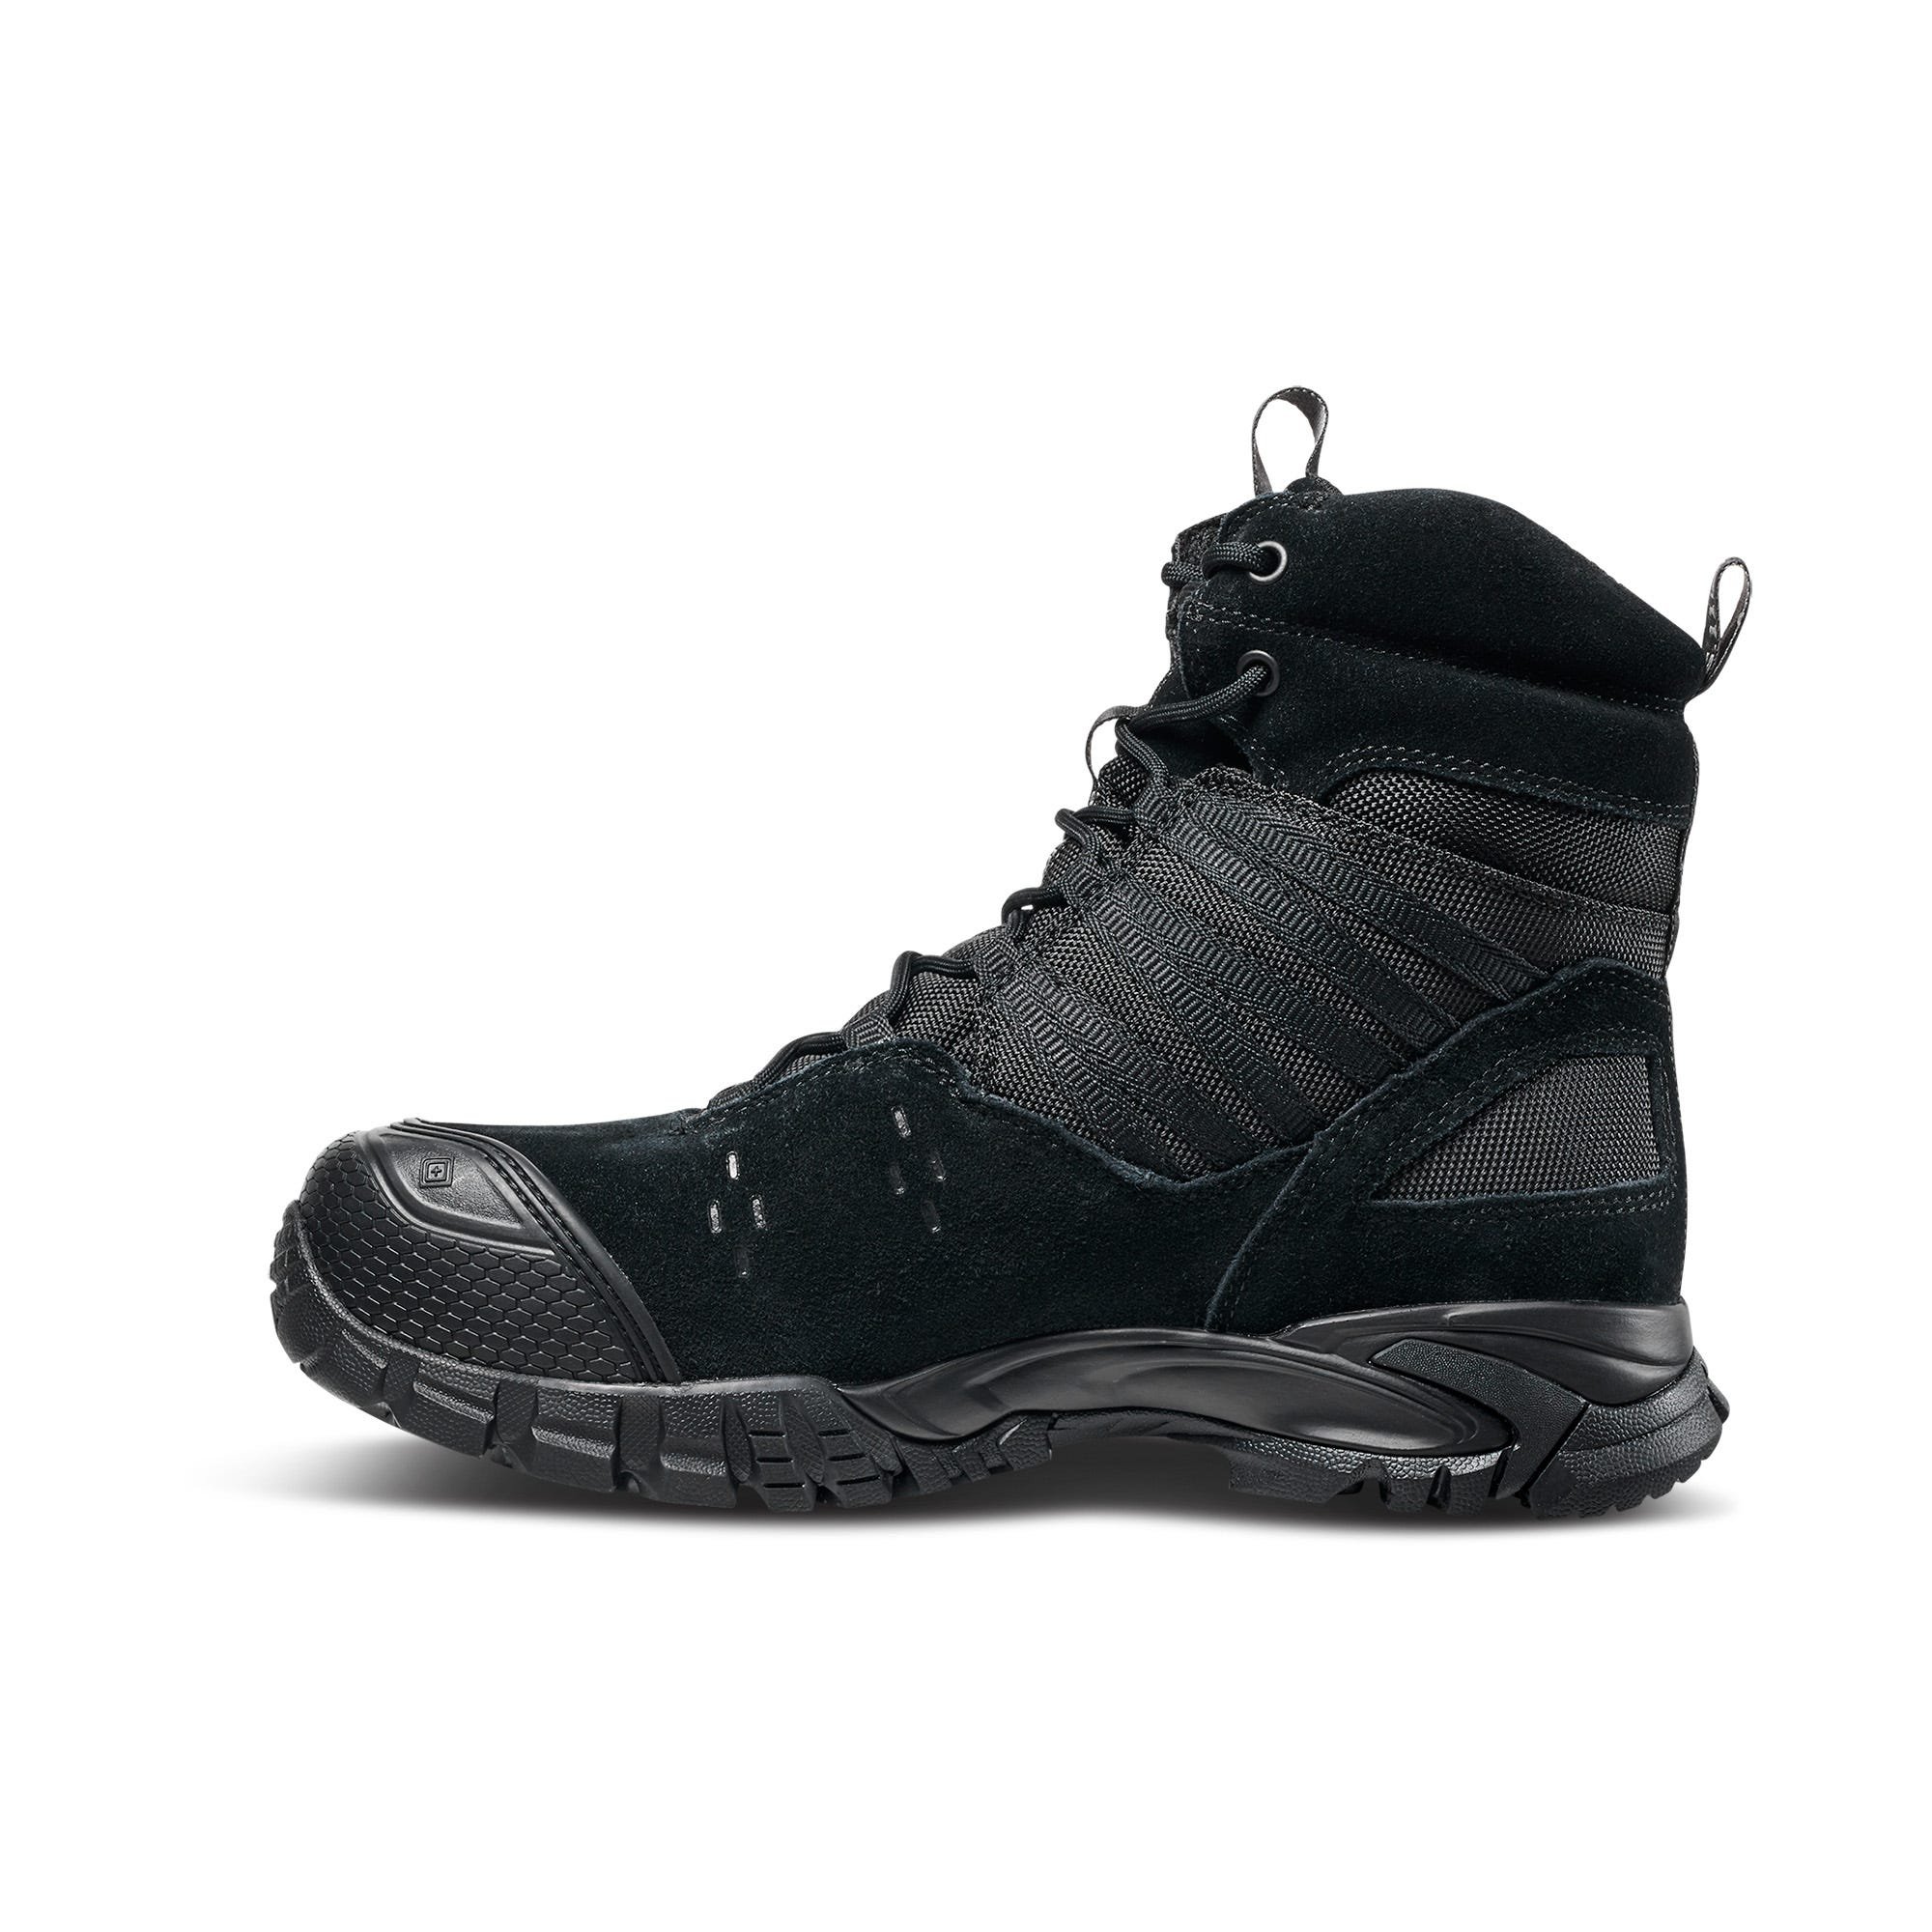 5.11 Work Gear Men's Union Waterproof 6-Inch Work Boots, Shock Absorbing Insole, Black, 7 Wide, Style 12390 - image 5 of 8